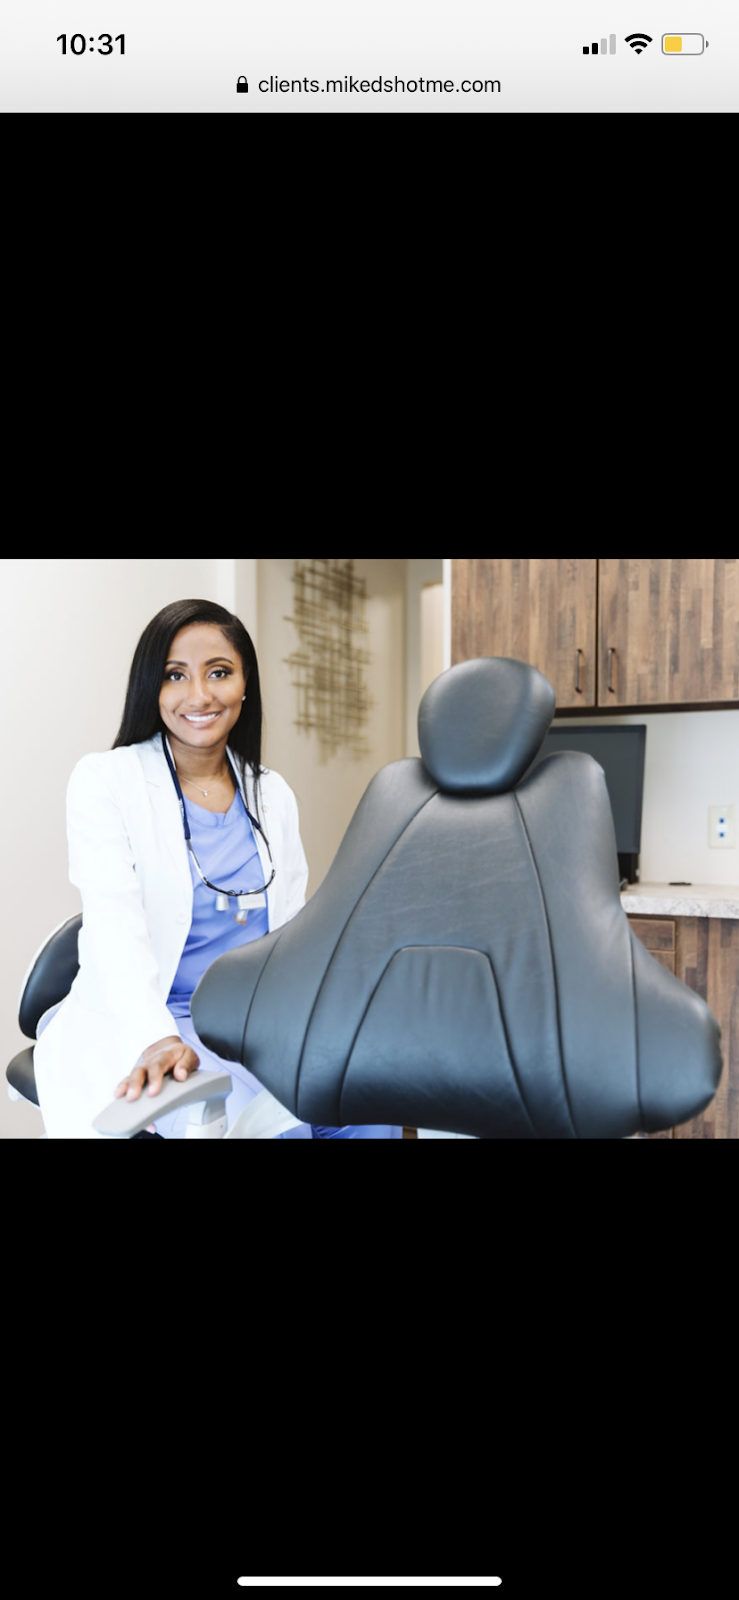 Calm Dentistry | 1075 Cooper Rd Suite 101, Grayson, GA 30017, USA | Phone: (470) 474-2256